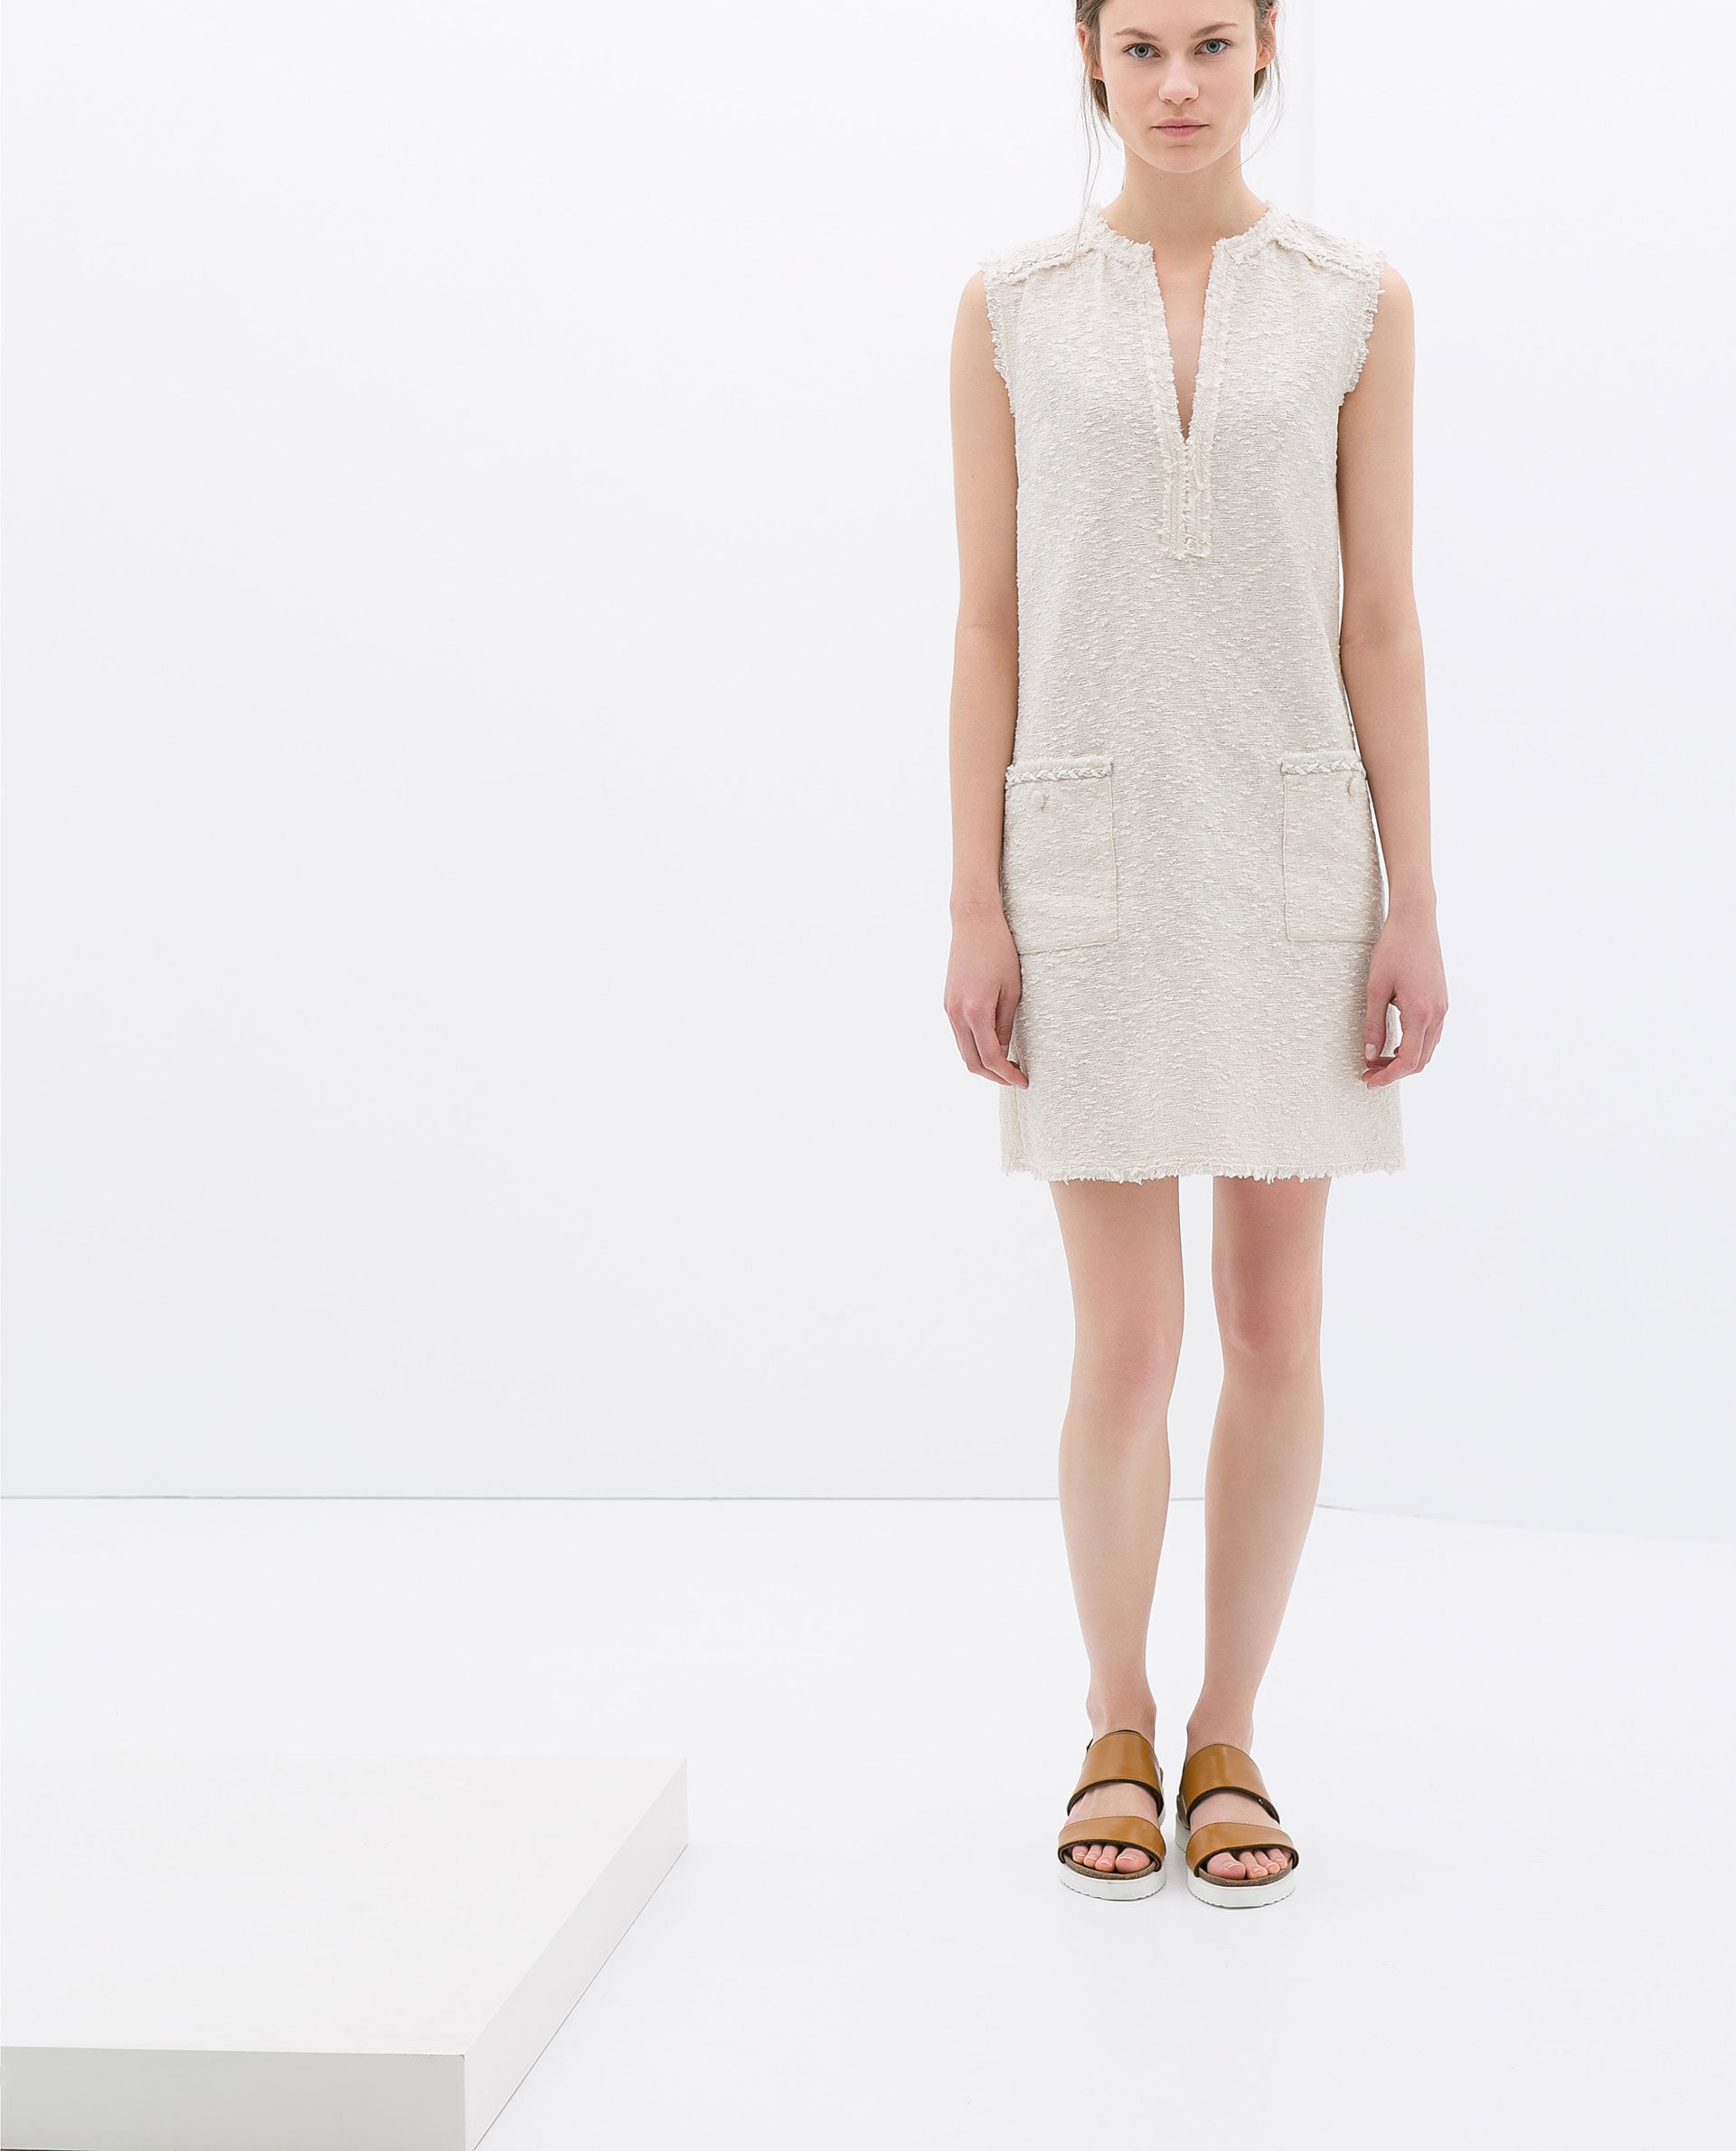 Zara white sleeveless boucle dress 